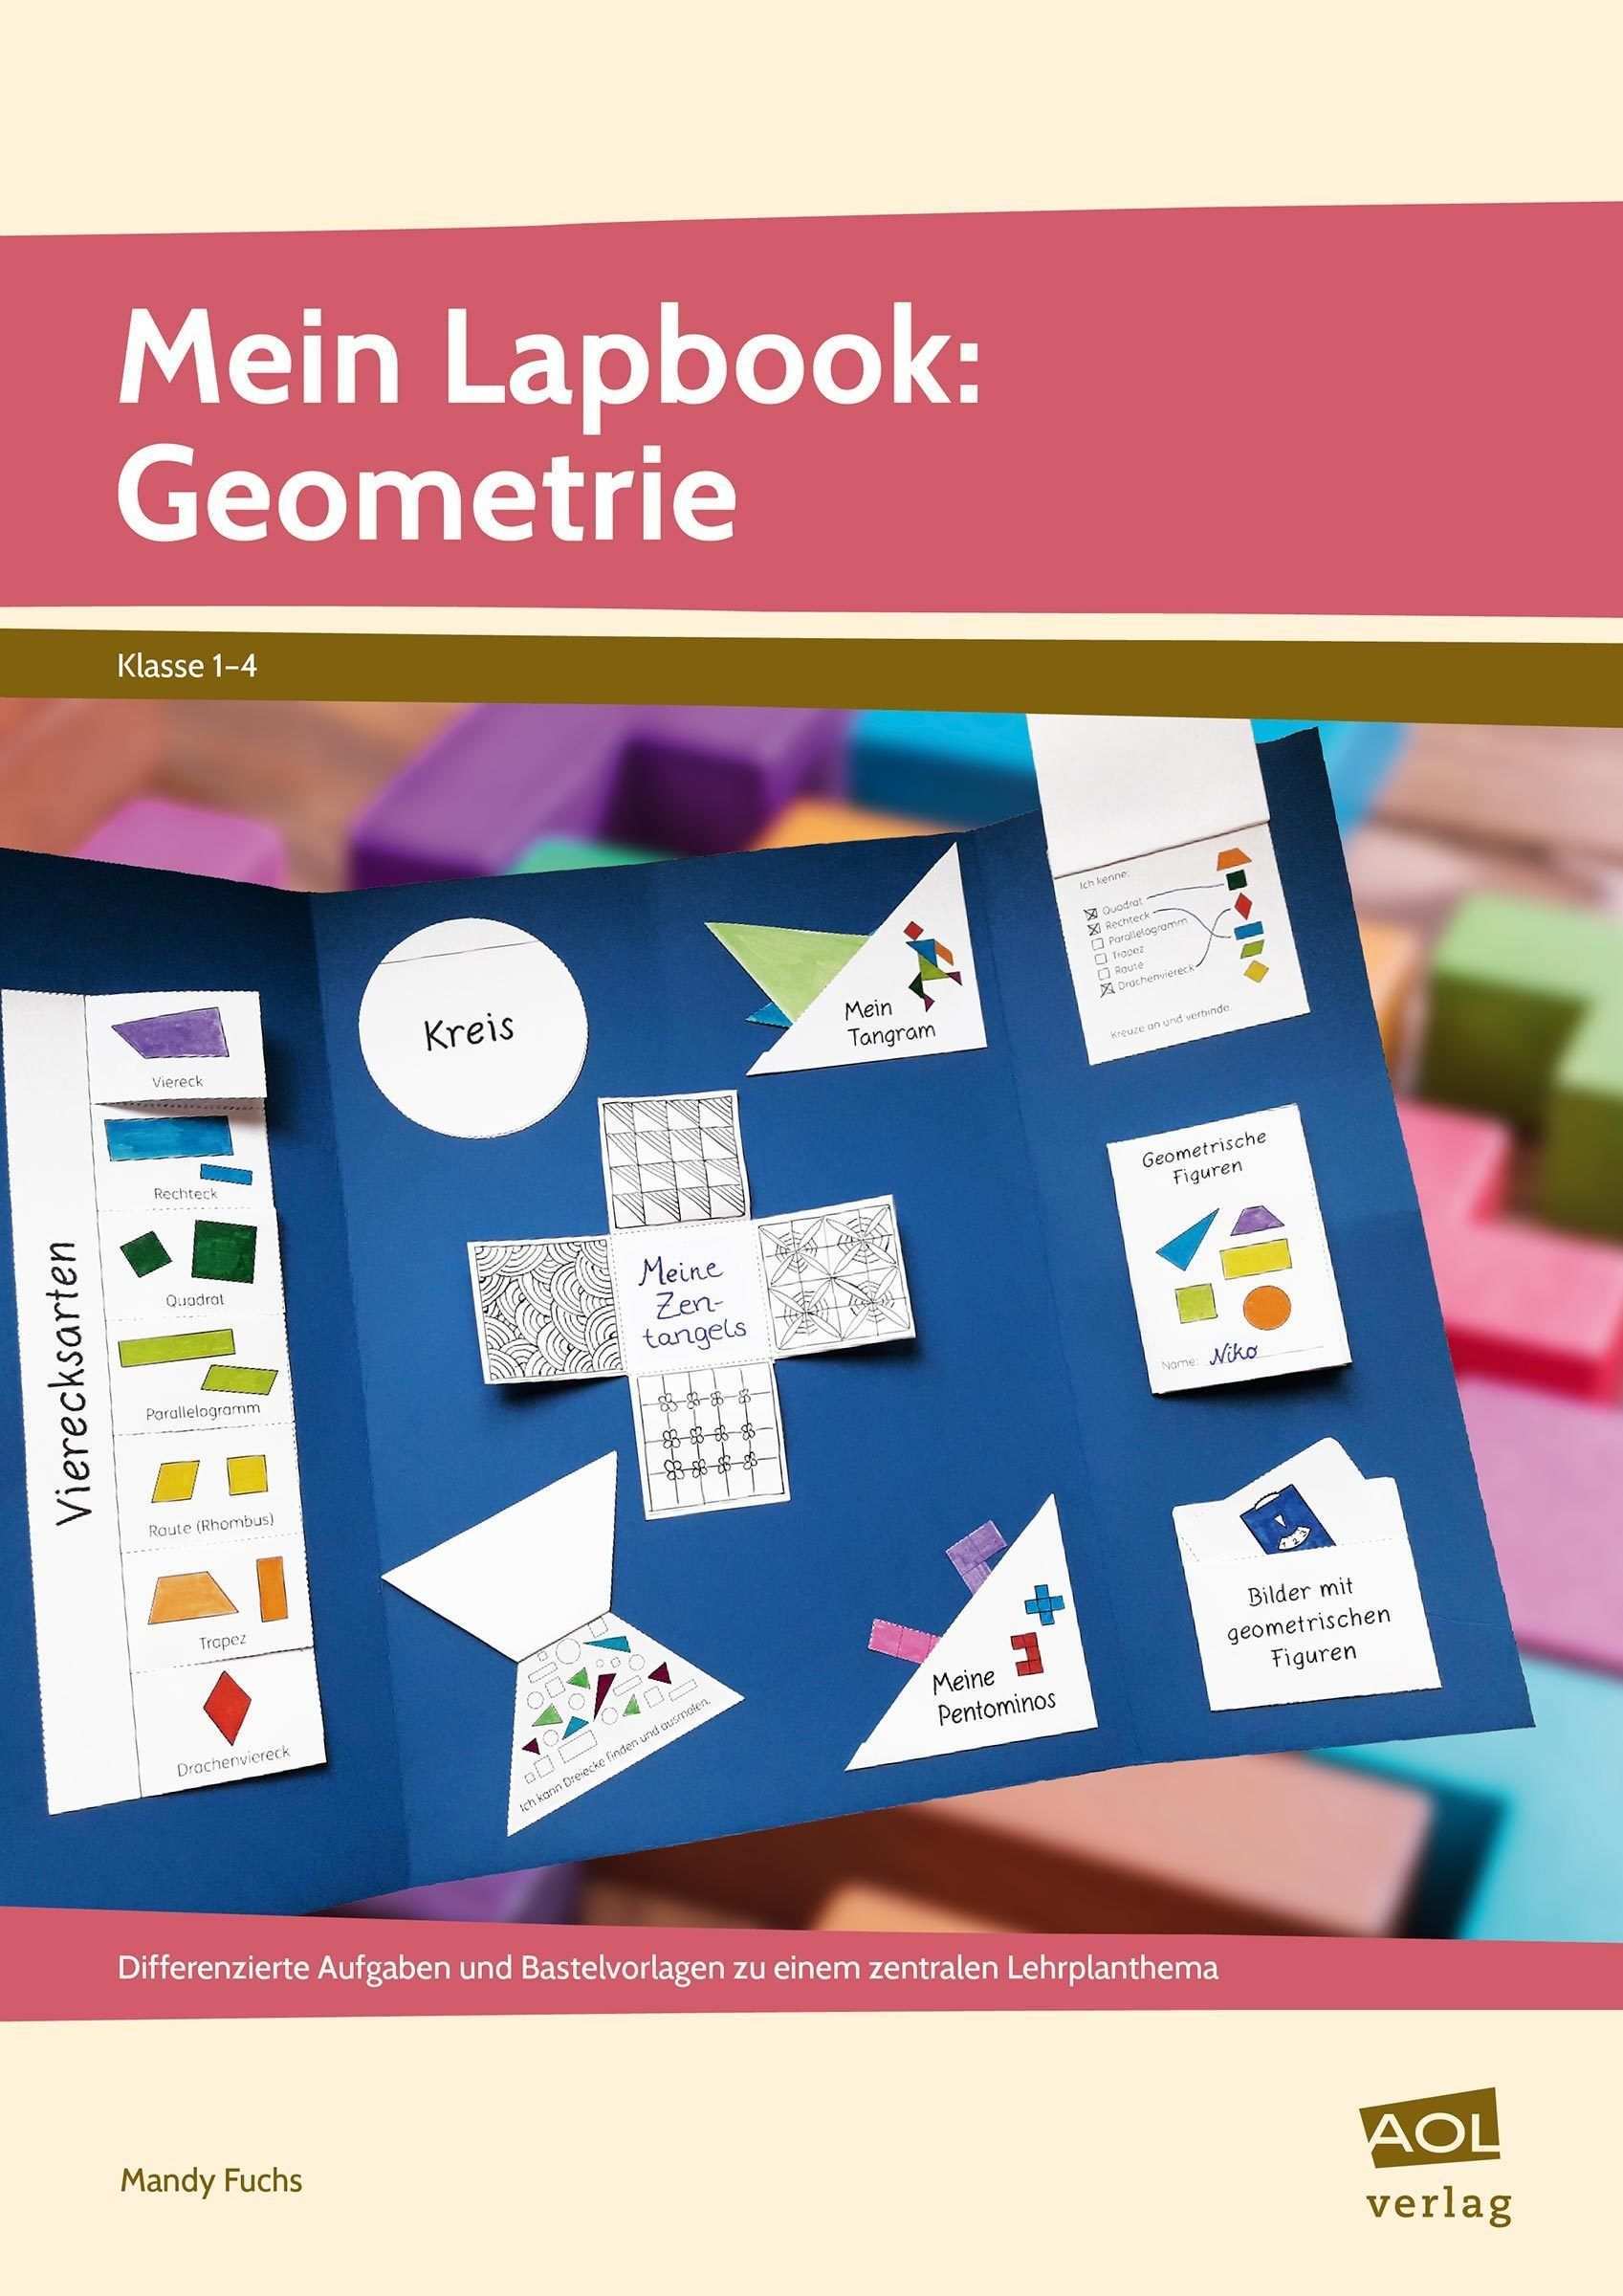 Mein Lapbook Geometrie Geometrie Lernheft Mathematikunterricht